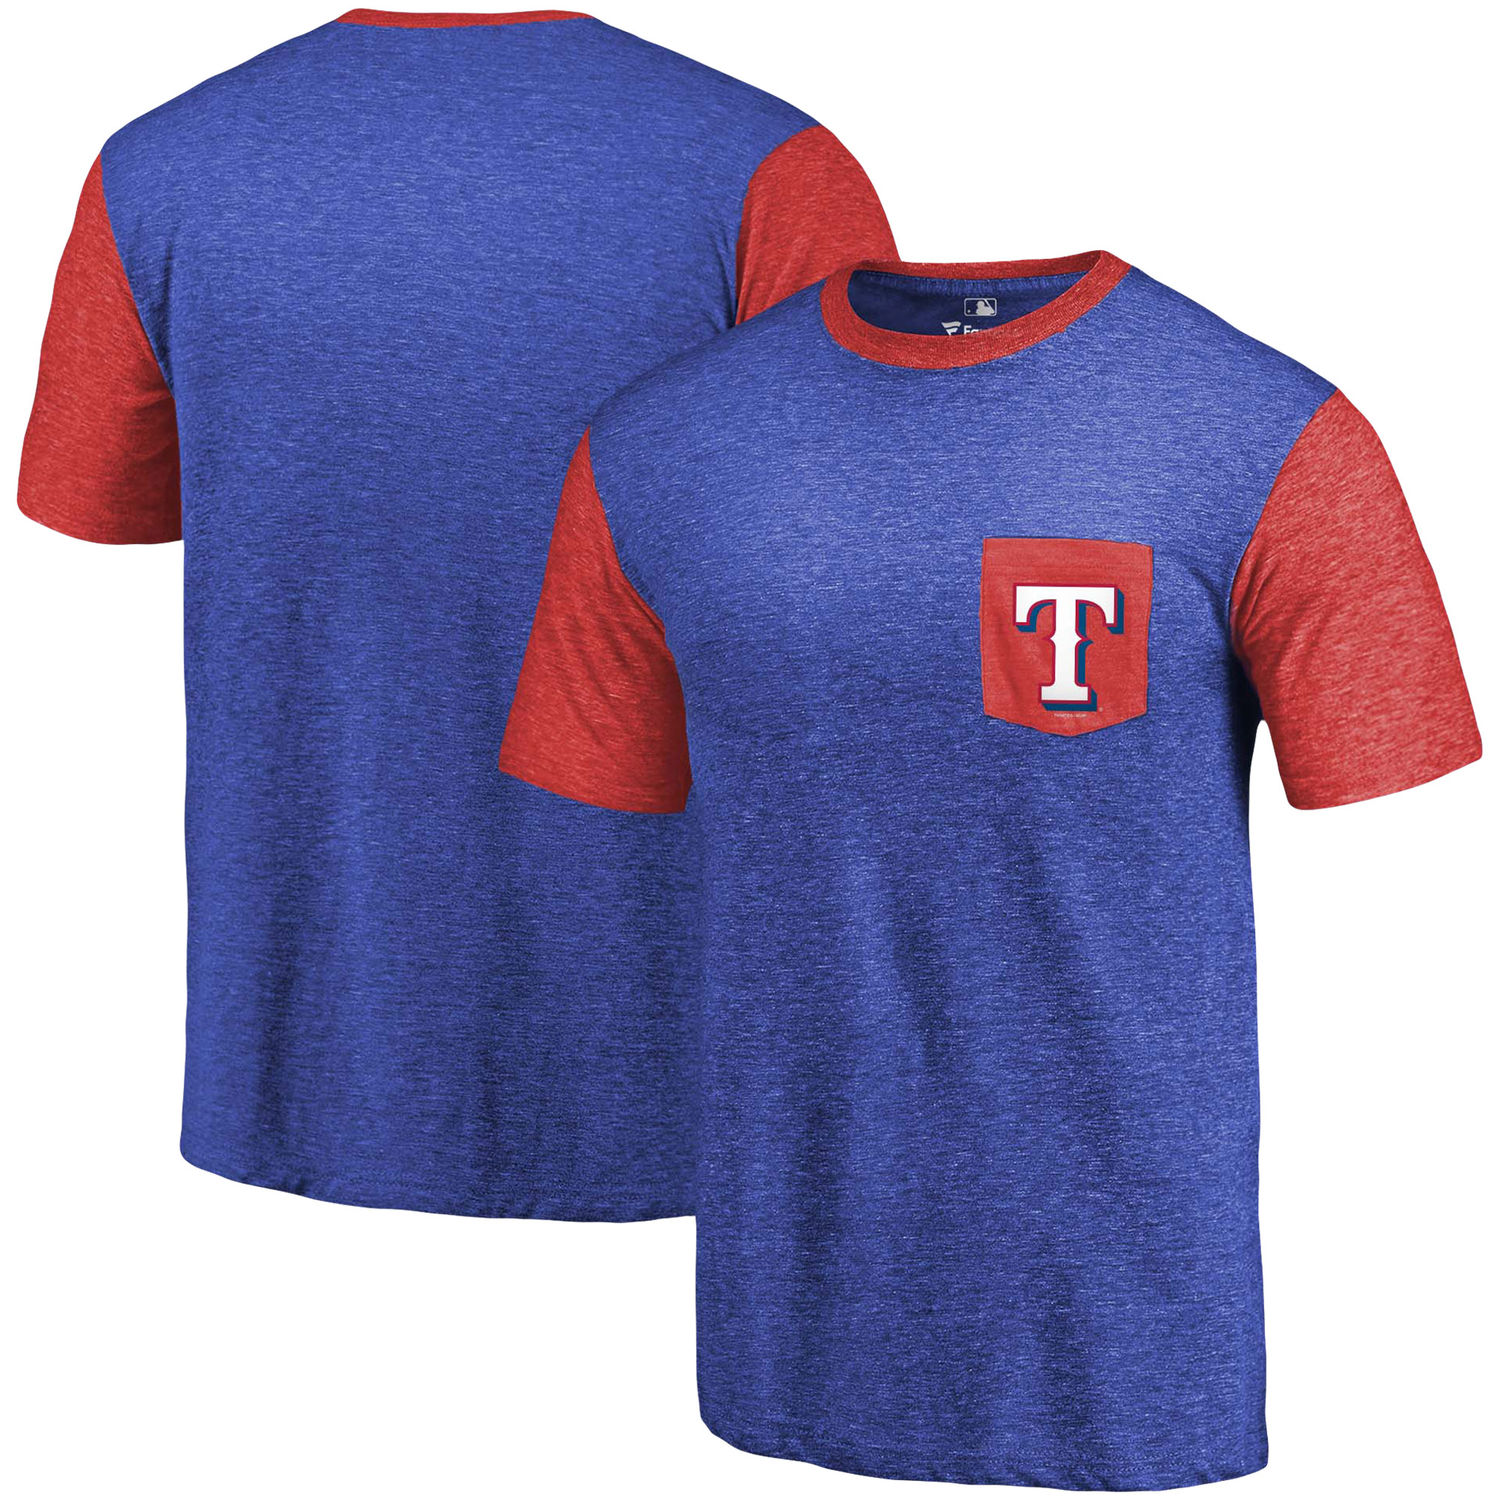 Men's Texas Rangers Fanatics Branded Royal/Red Tri-Blend Refresh Pocket T-Shirt